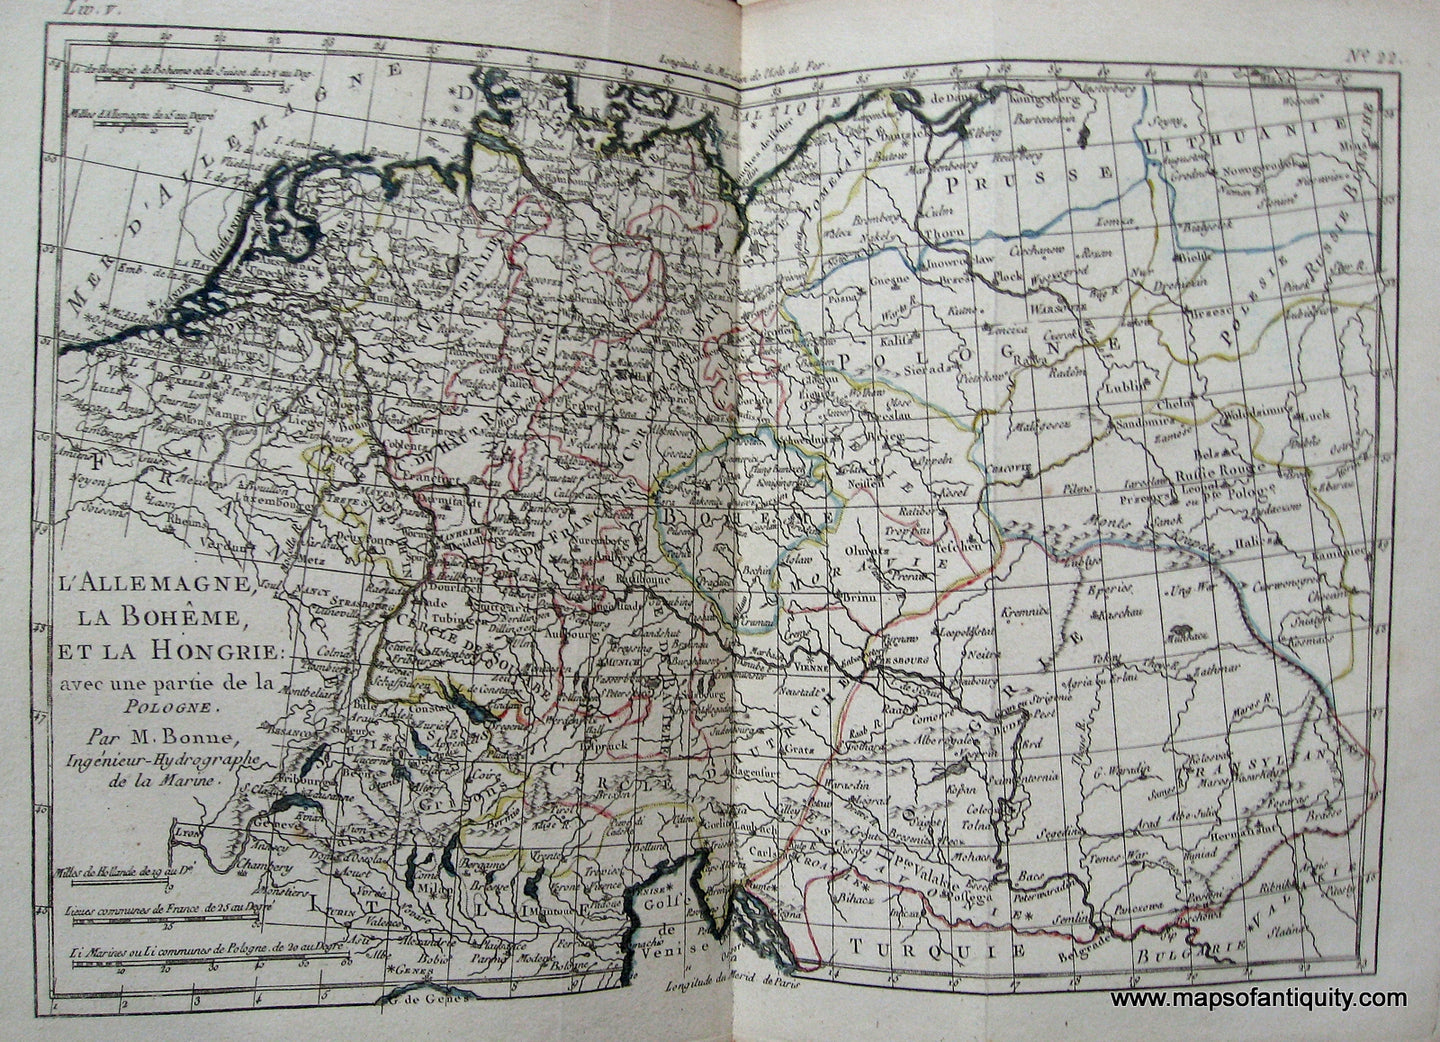 Antique-Hand-Colored-Map-L'Allemagne-la-Boheme-et-la-Hongrie-etc.-Europe-Germany-1780-Raynal-and-Bonne-Maps-Of-Antiquity